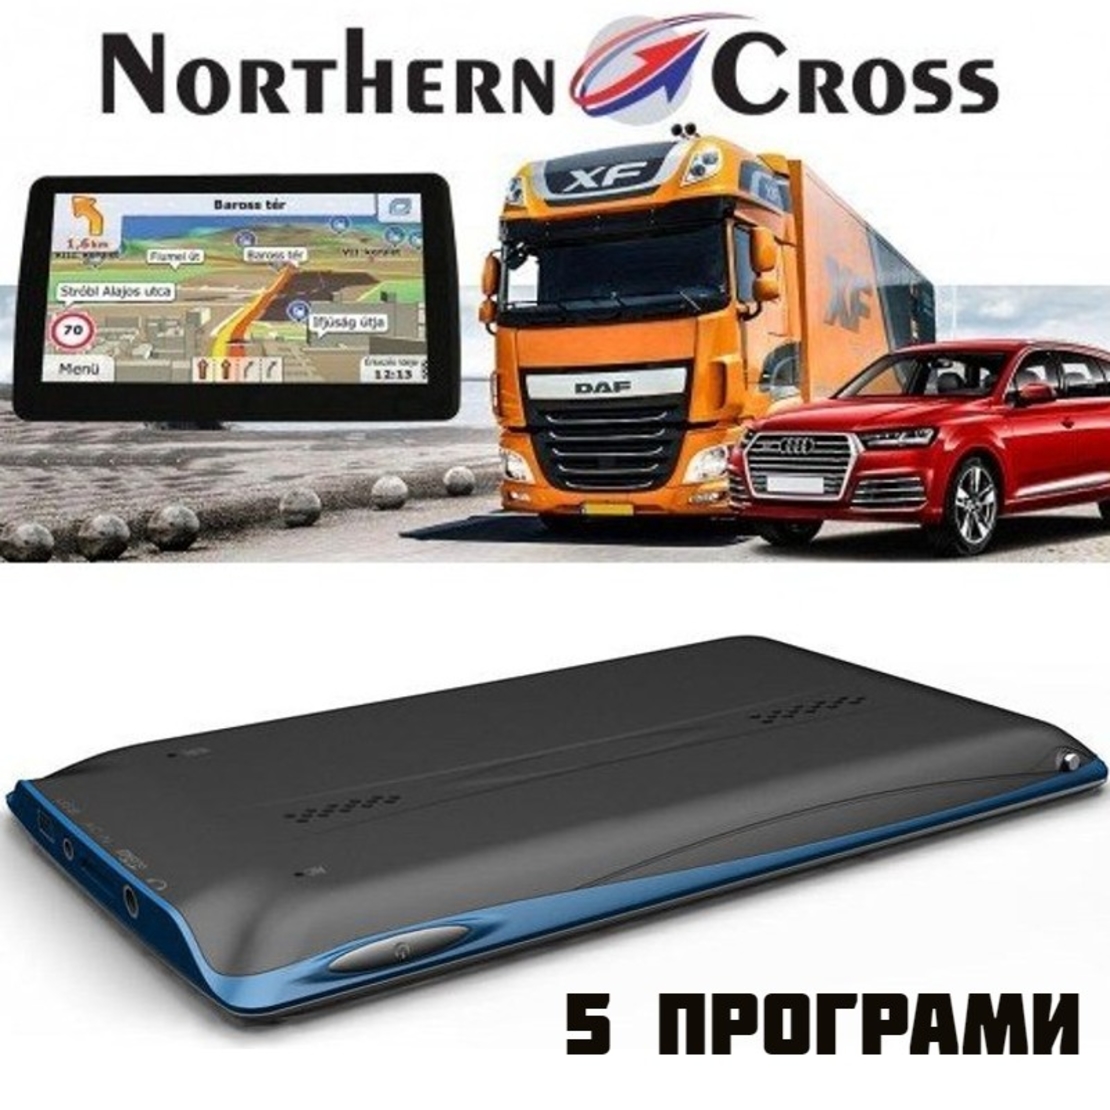 GPS Навигация Northern Cross NC-712S LE, 7 инча, 256 MB RAM, 5 програми